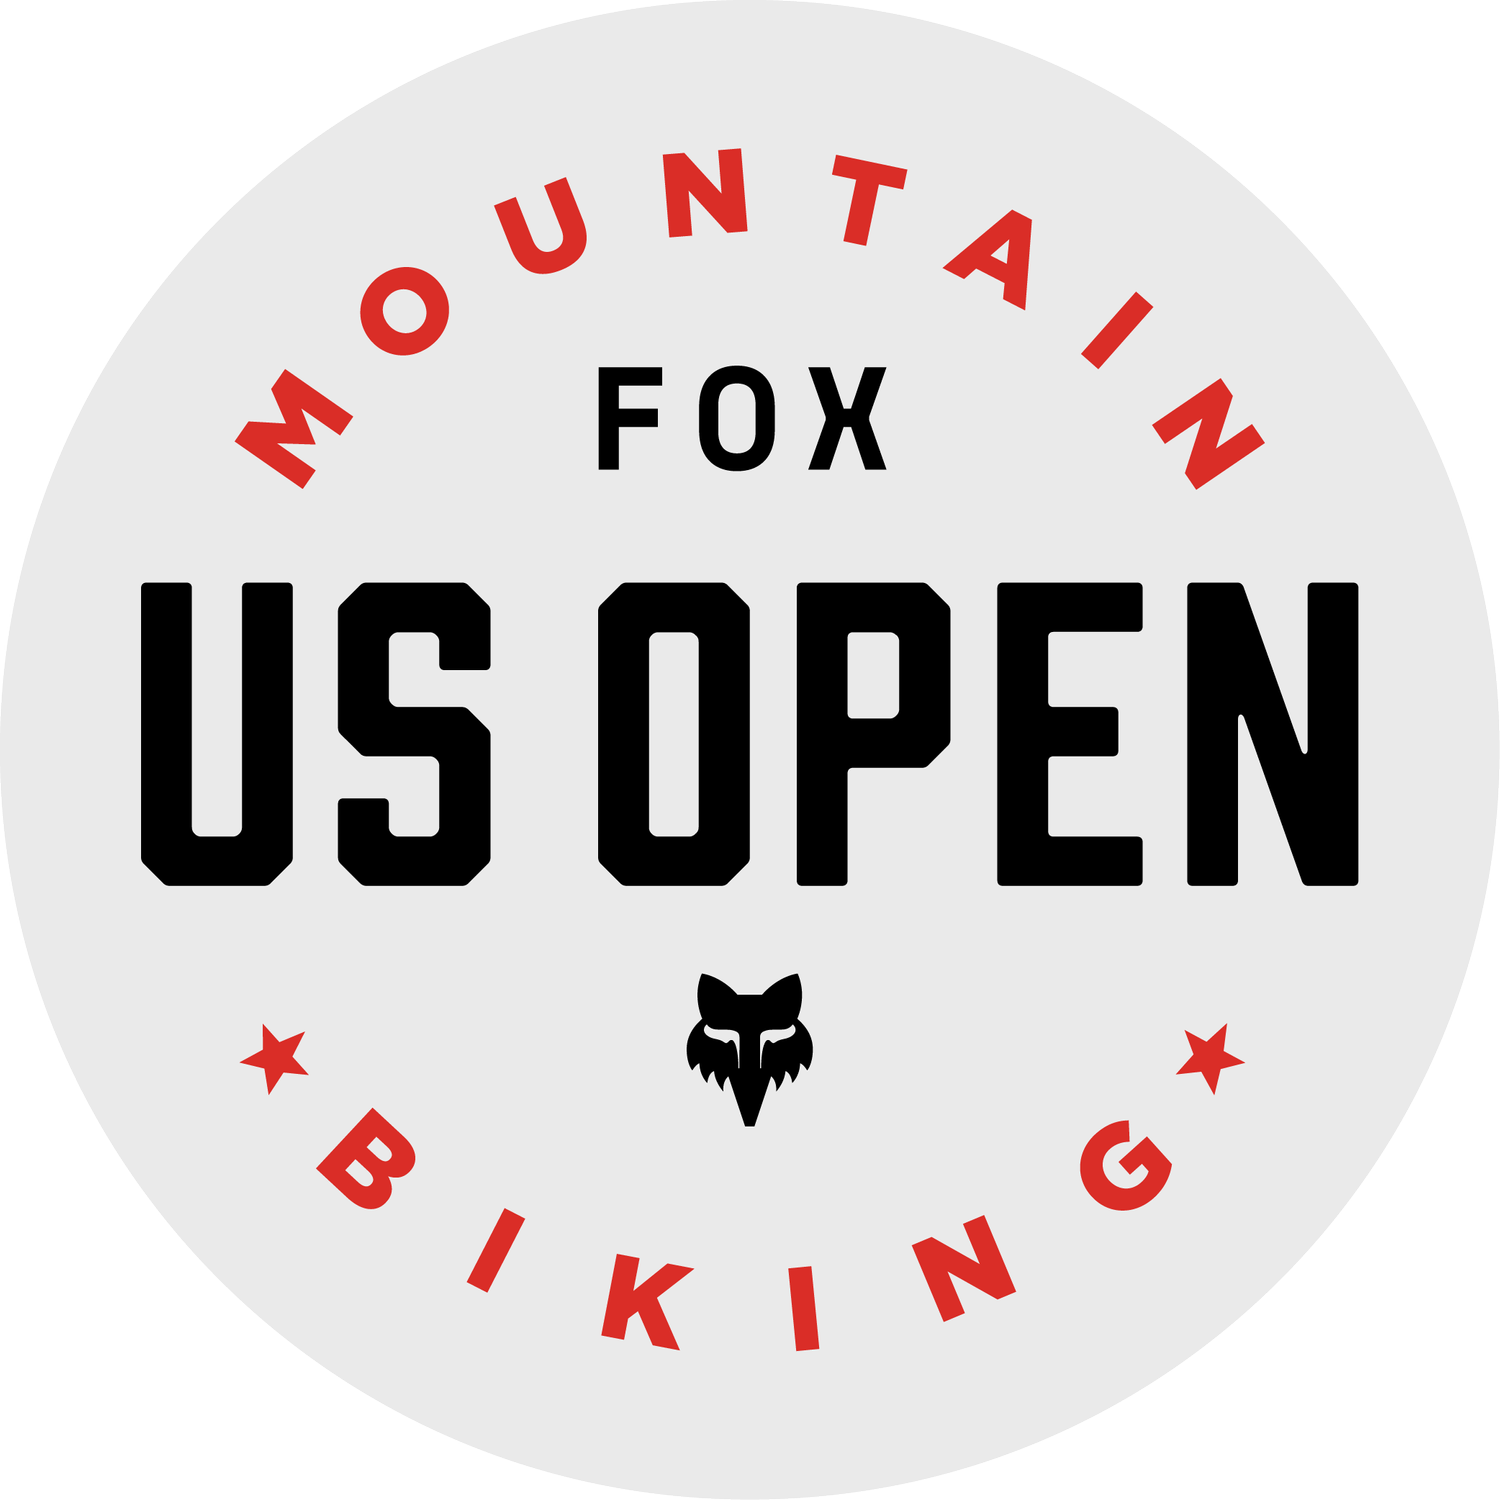 Fox US Open of Mountain Biking